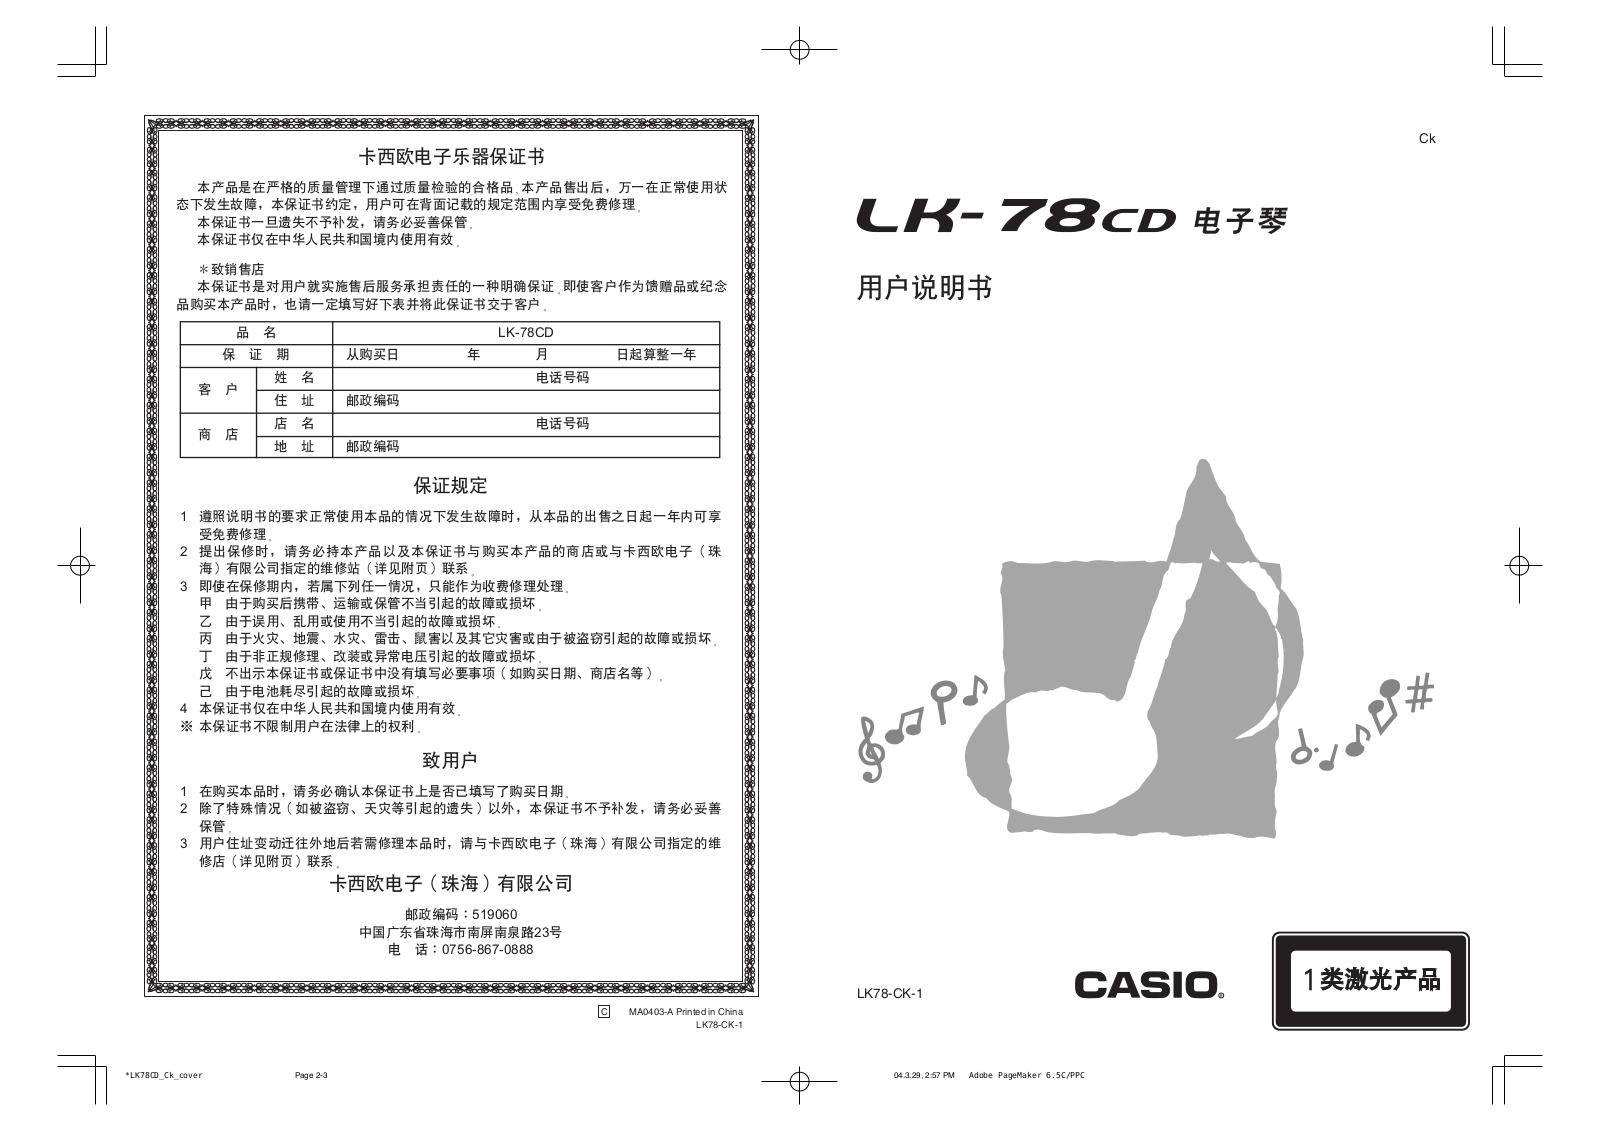 CASIO LK-78CD User Manual